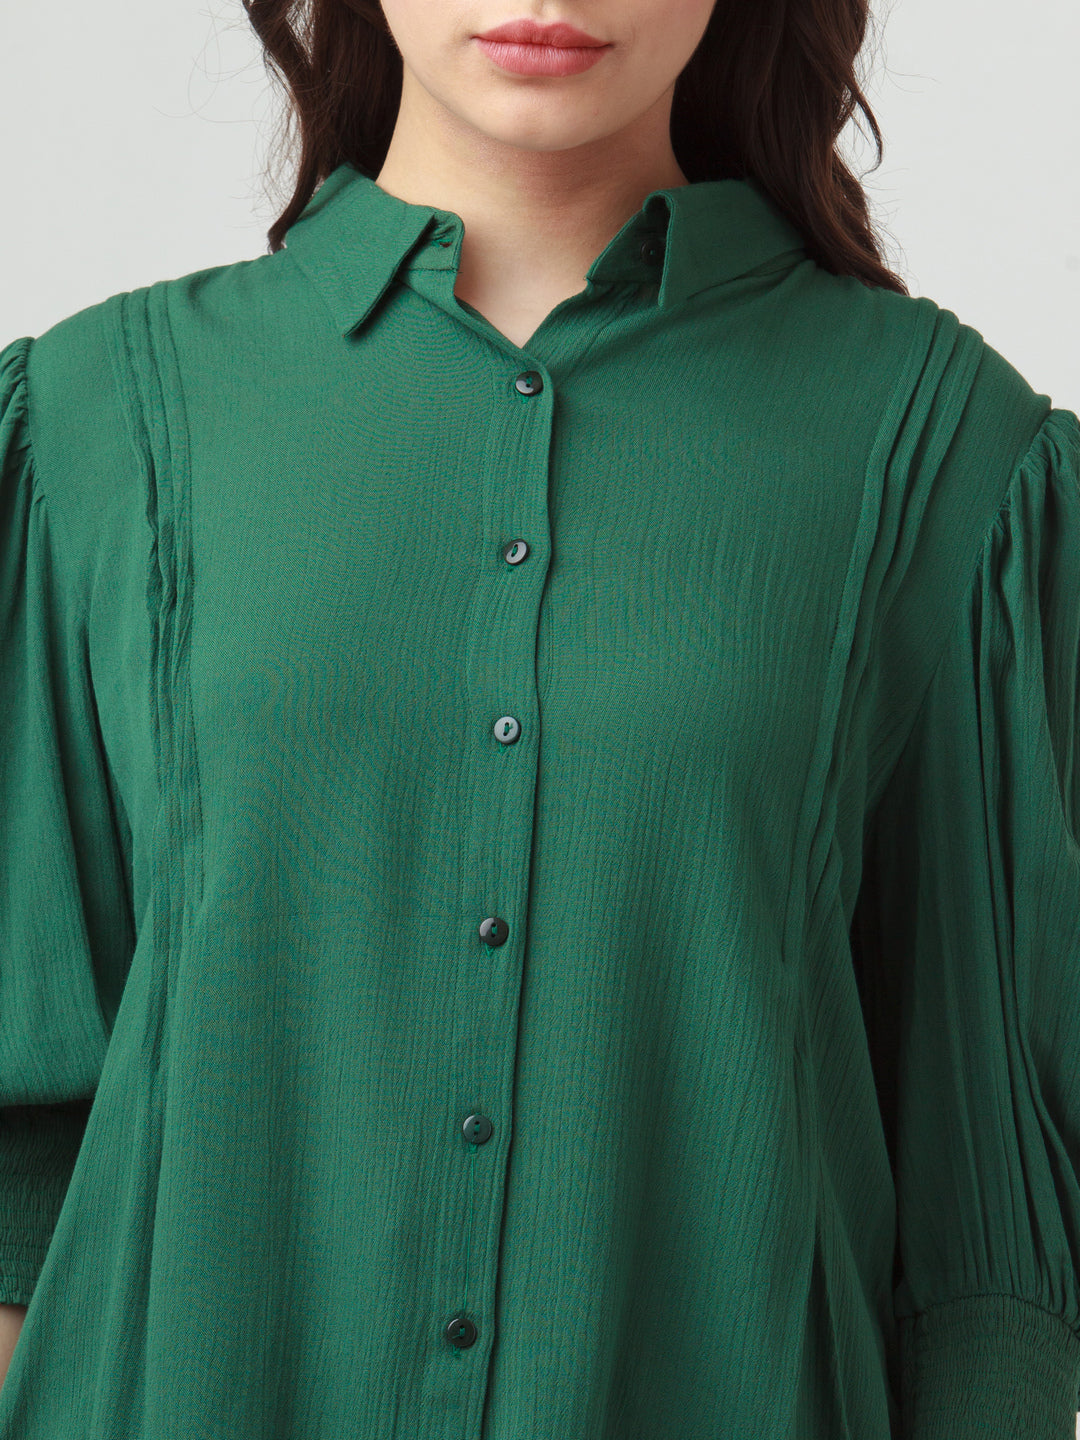 Green Solid Shirt For Women